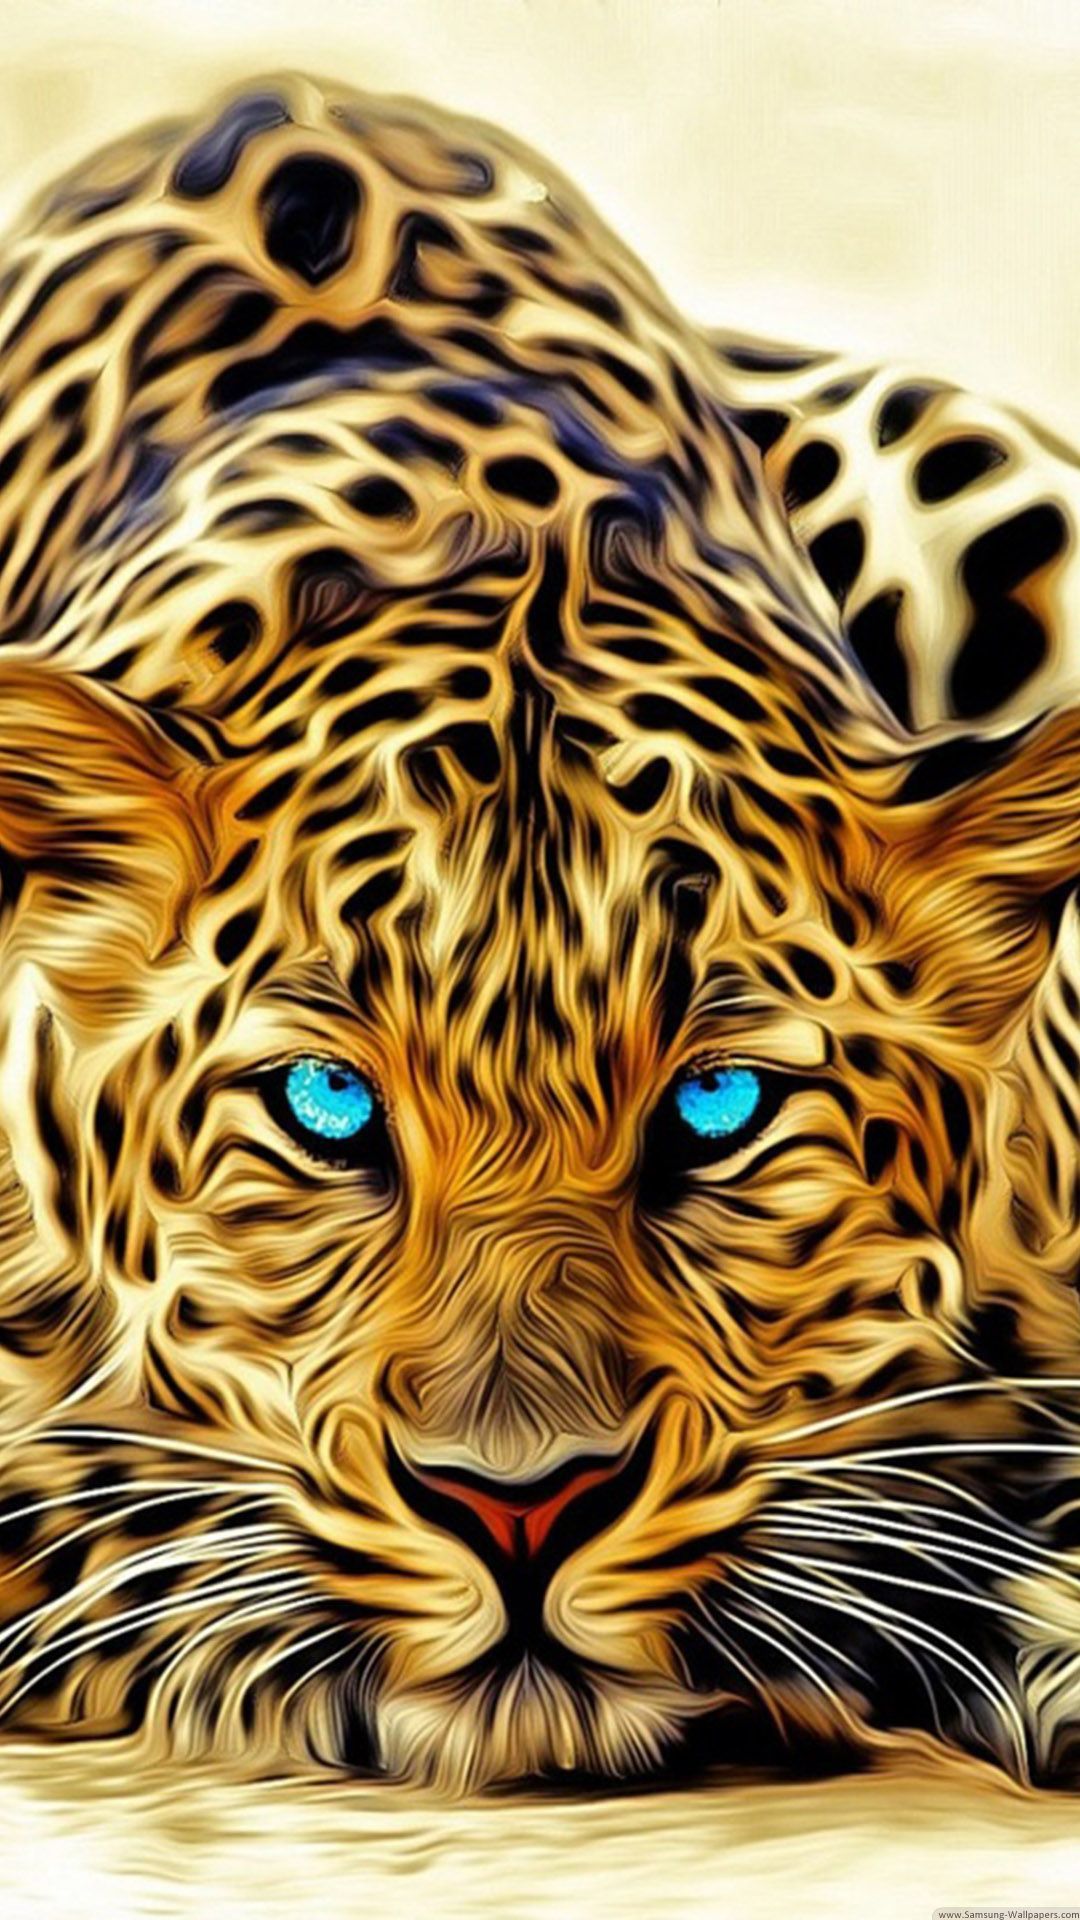 X d animal tiger iphone hd images free download iphone wallpapers jaguar wallpaper big cats art lion live wallpaper